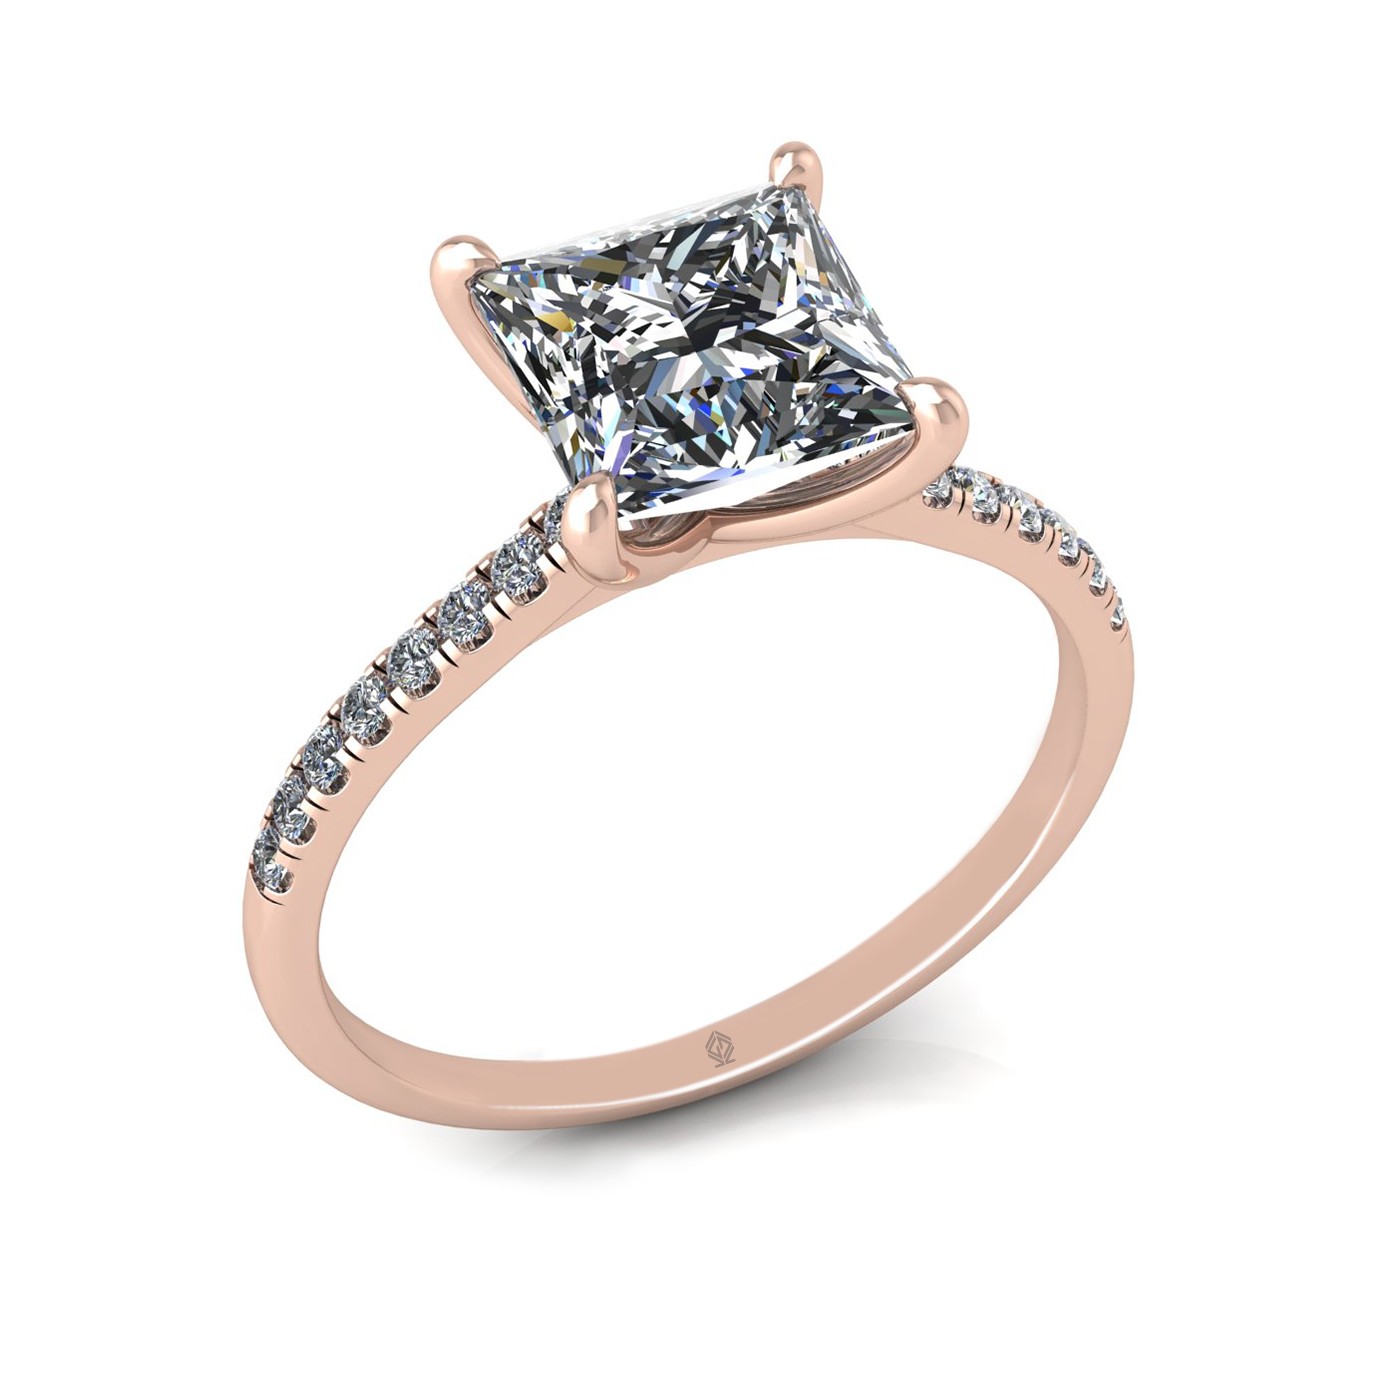 18k rose gold 2,00 ct 4 prongs princess cut diamond engagement ring with whisper thin pavÉ set band